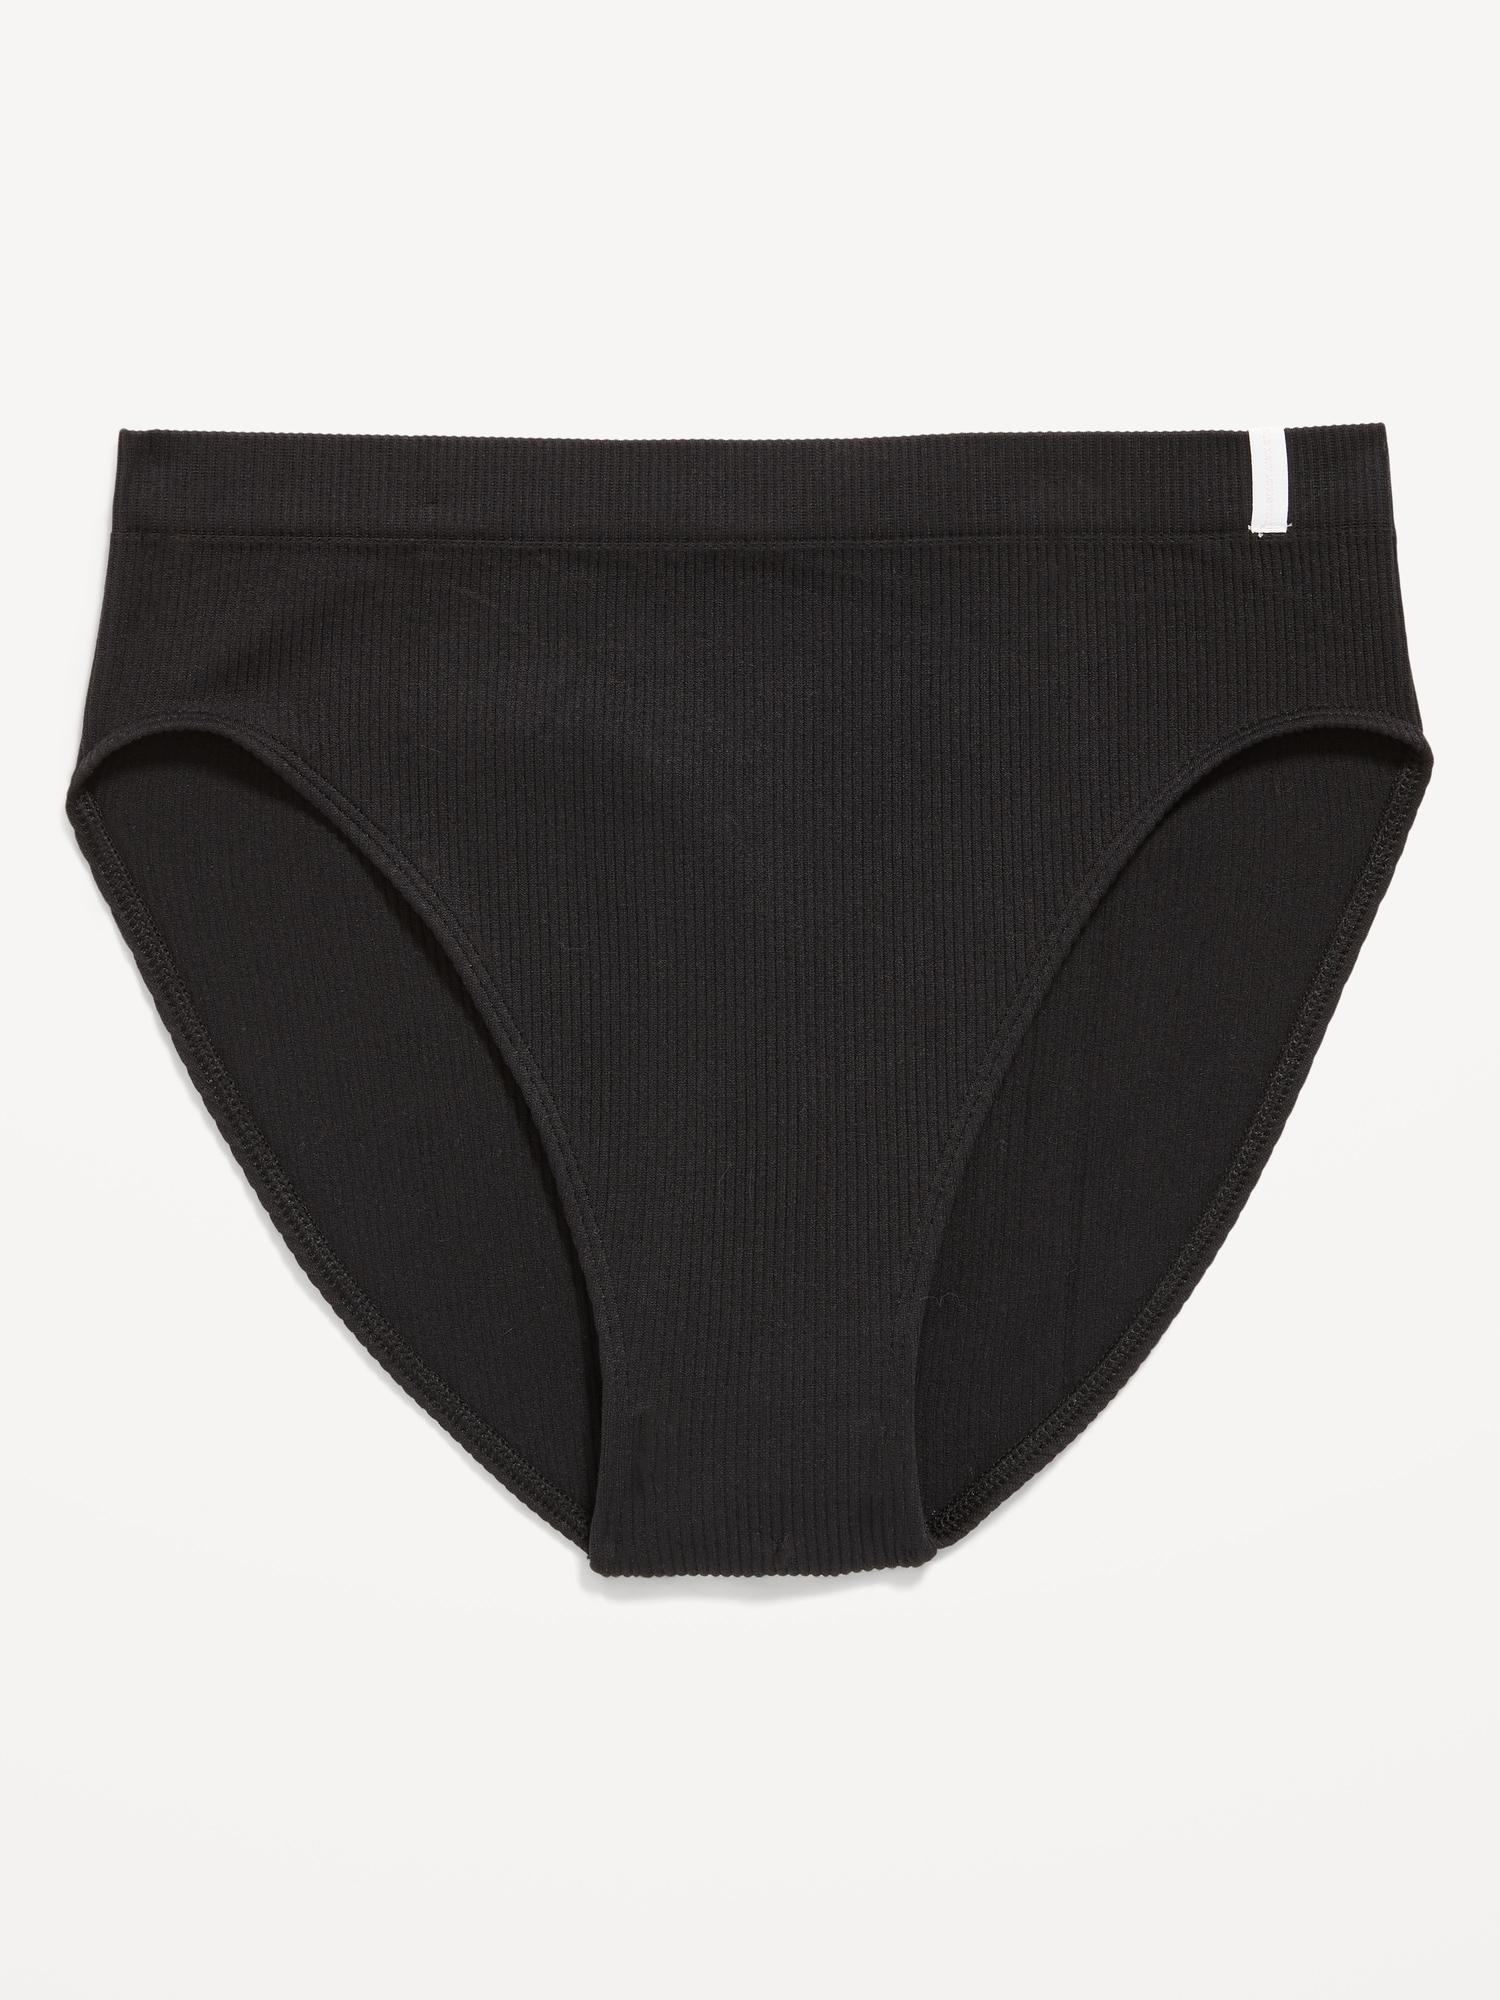 High-Waisted French-Cut Seamless Rib-Knit Bikini Underwear | Old Navy